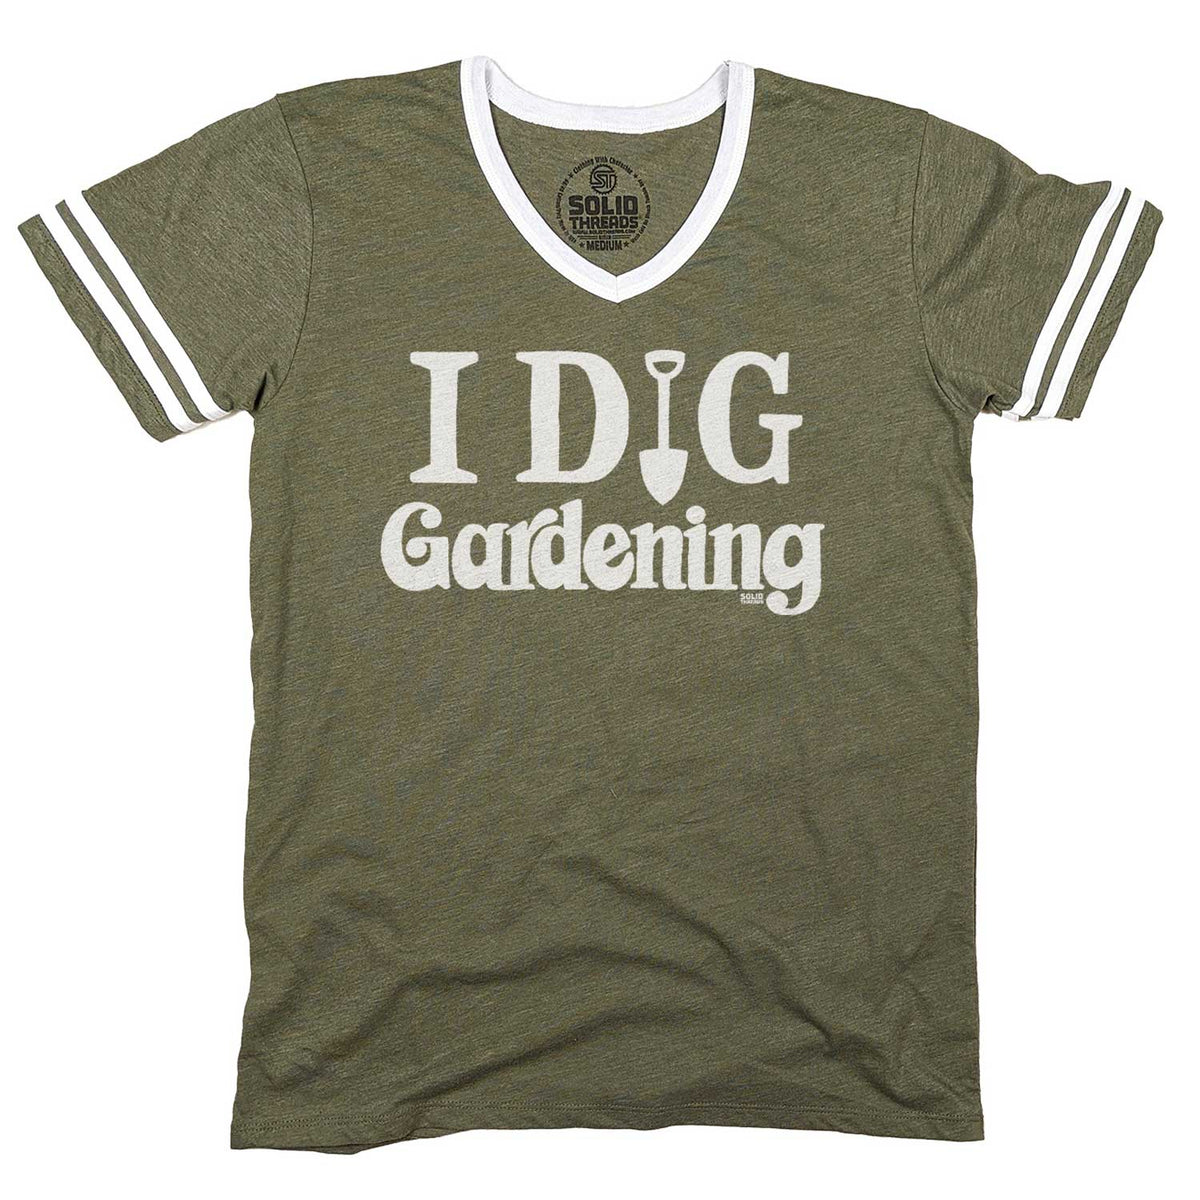 Men&#39;s I Dig Gardening Vintage Graphic V-Neck Tee | Retro Garden T-shirt | Solid Threads